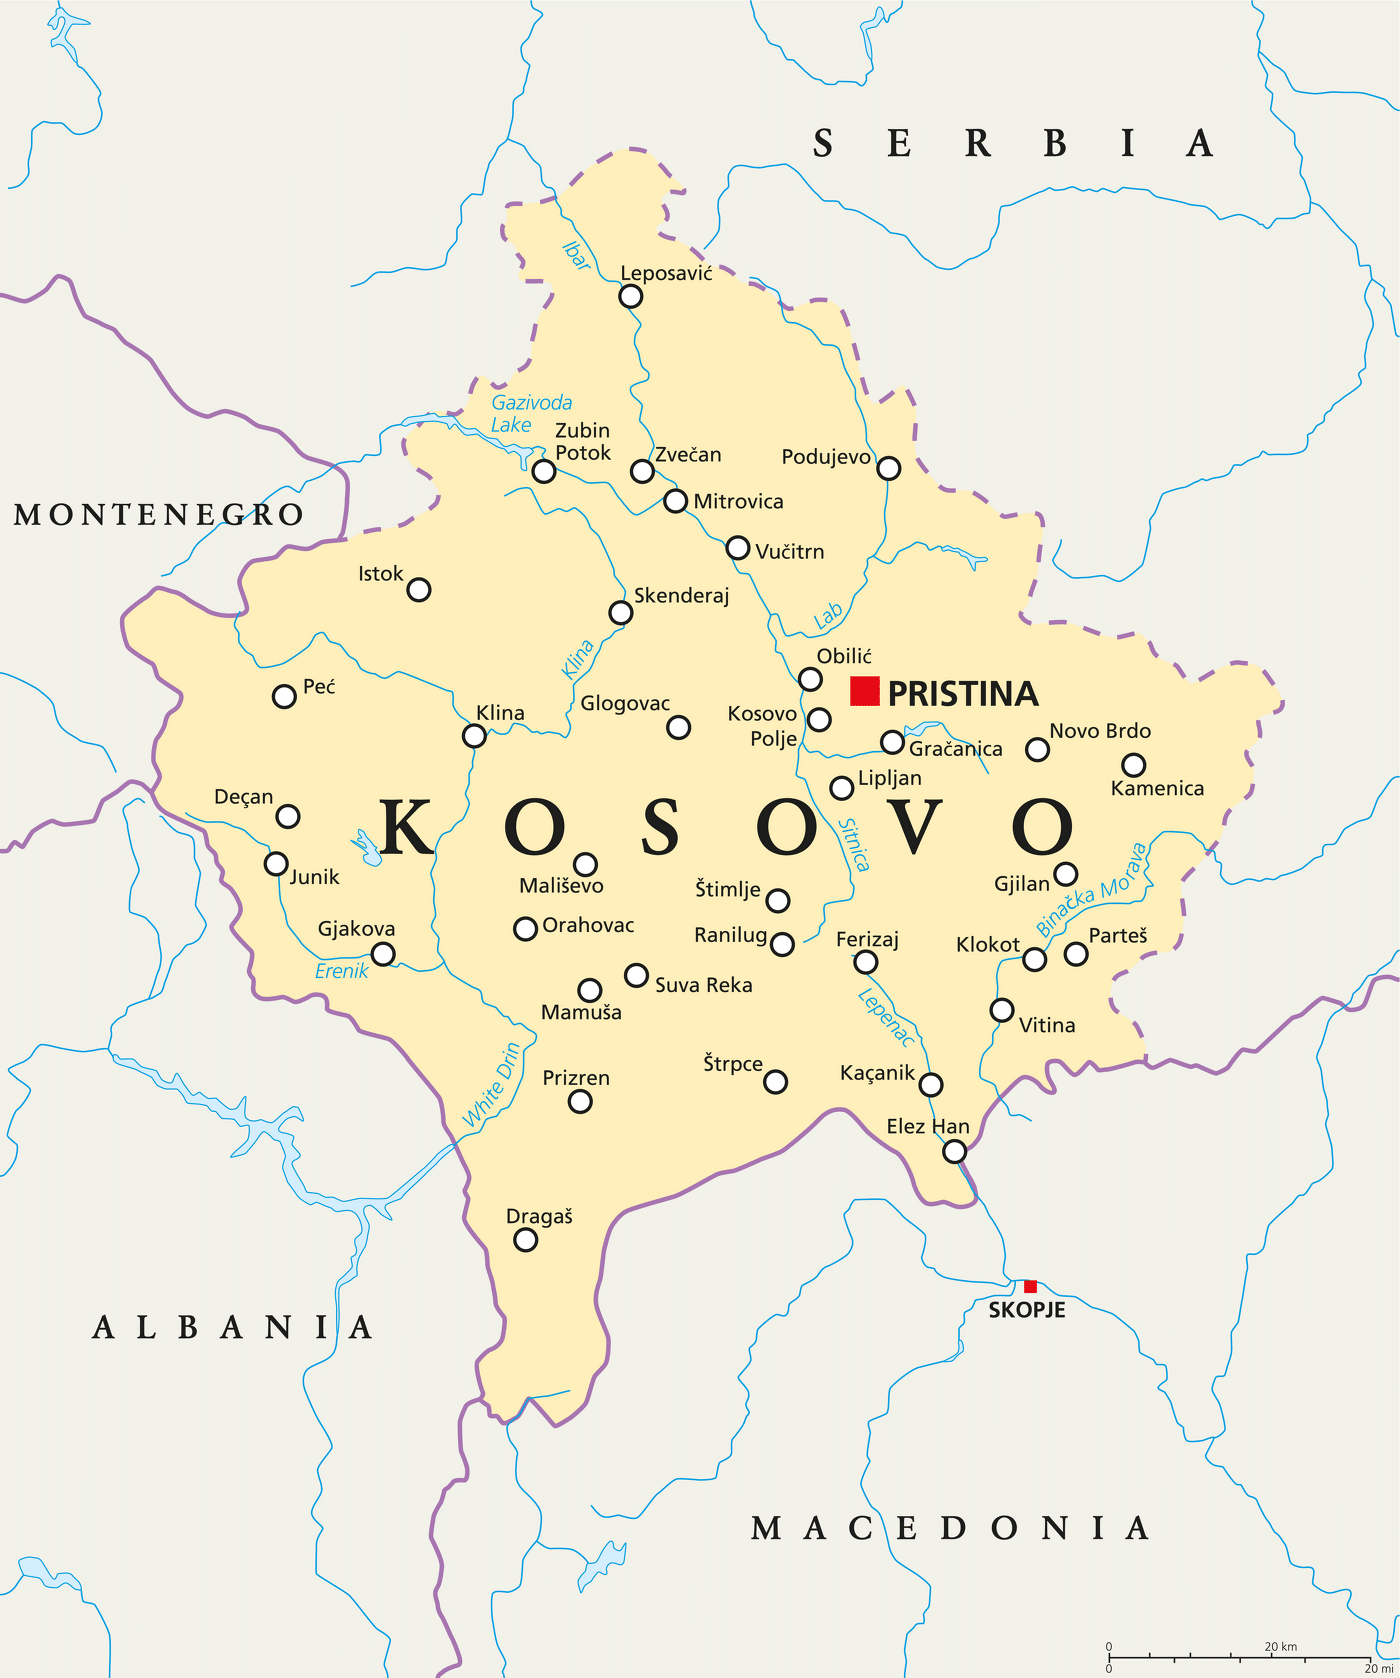 欧洲的科索沃地图。(Source: Shutterstock)